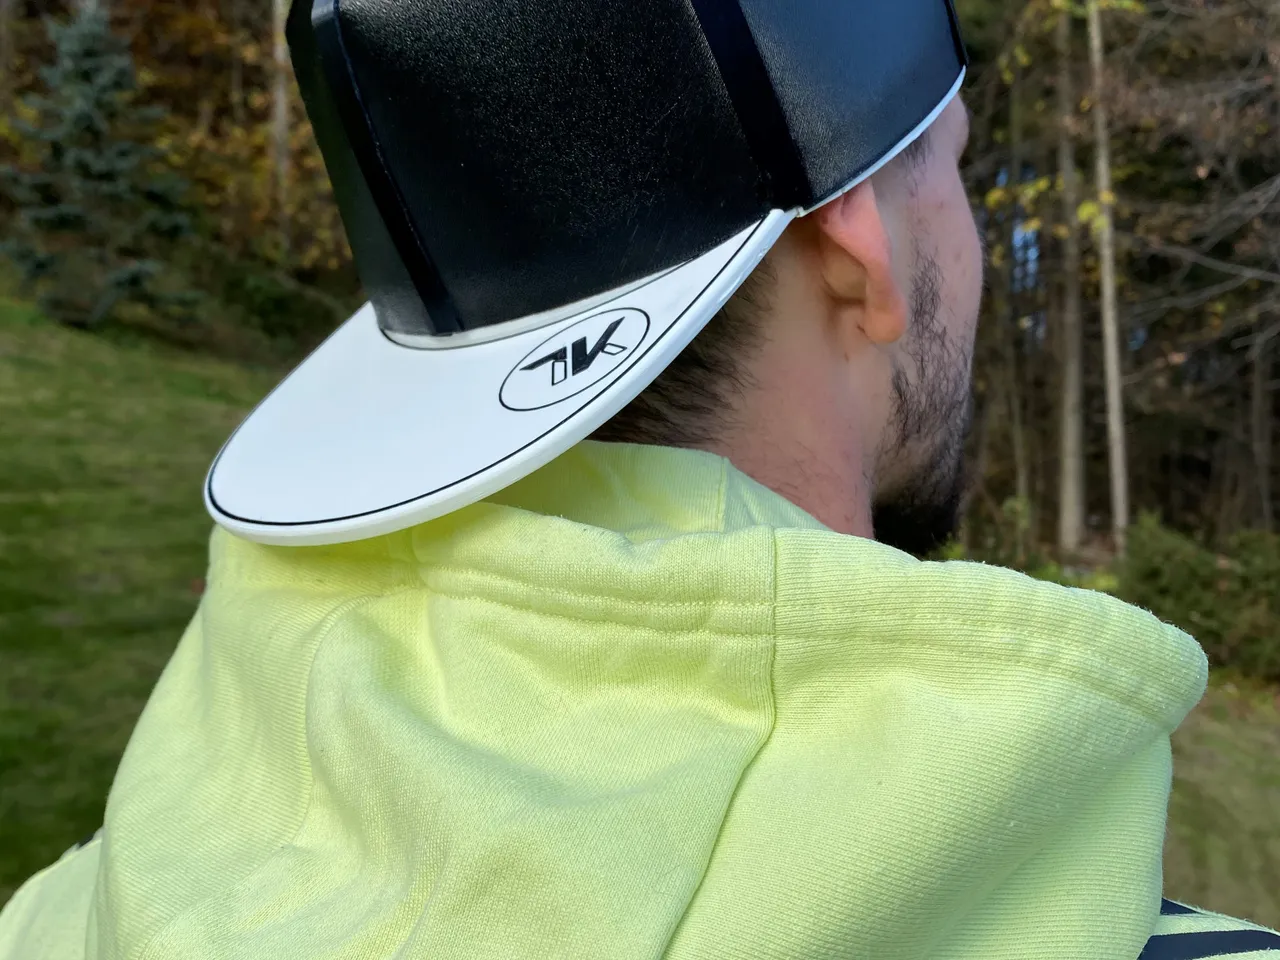 Xbacking Baseball Cap 3D Printed Adjustable Hats